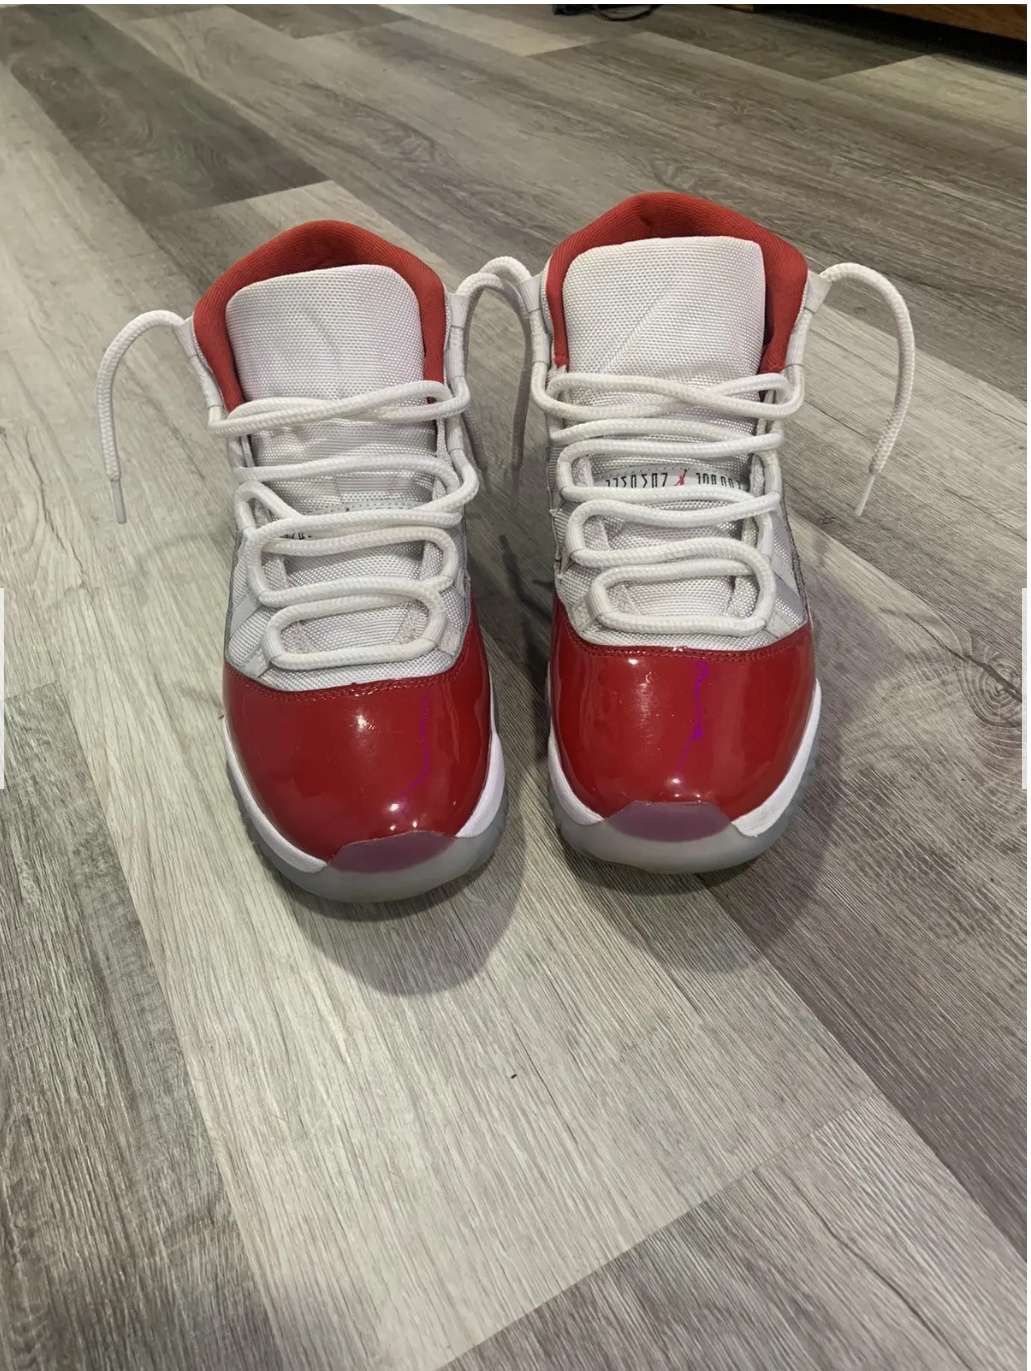 Jordan 11 Cherry Red Size 9,5 